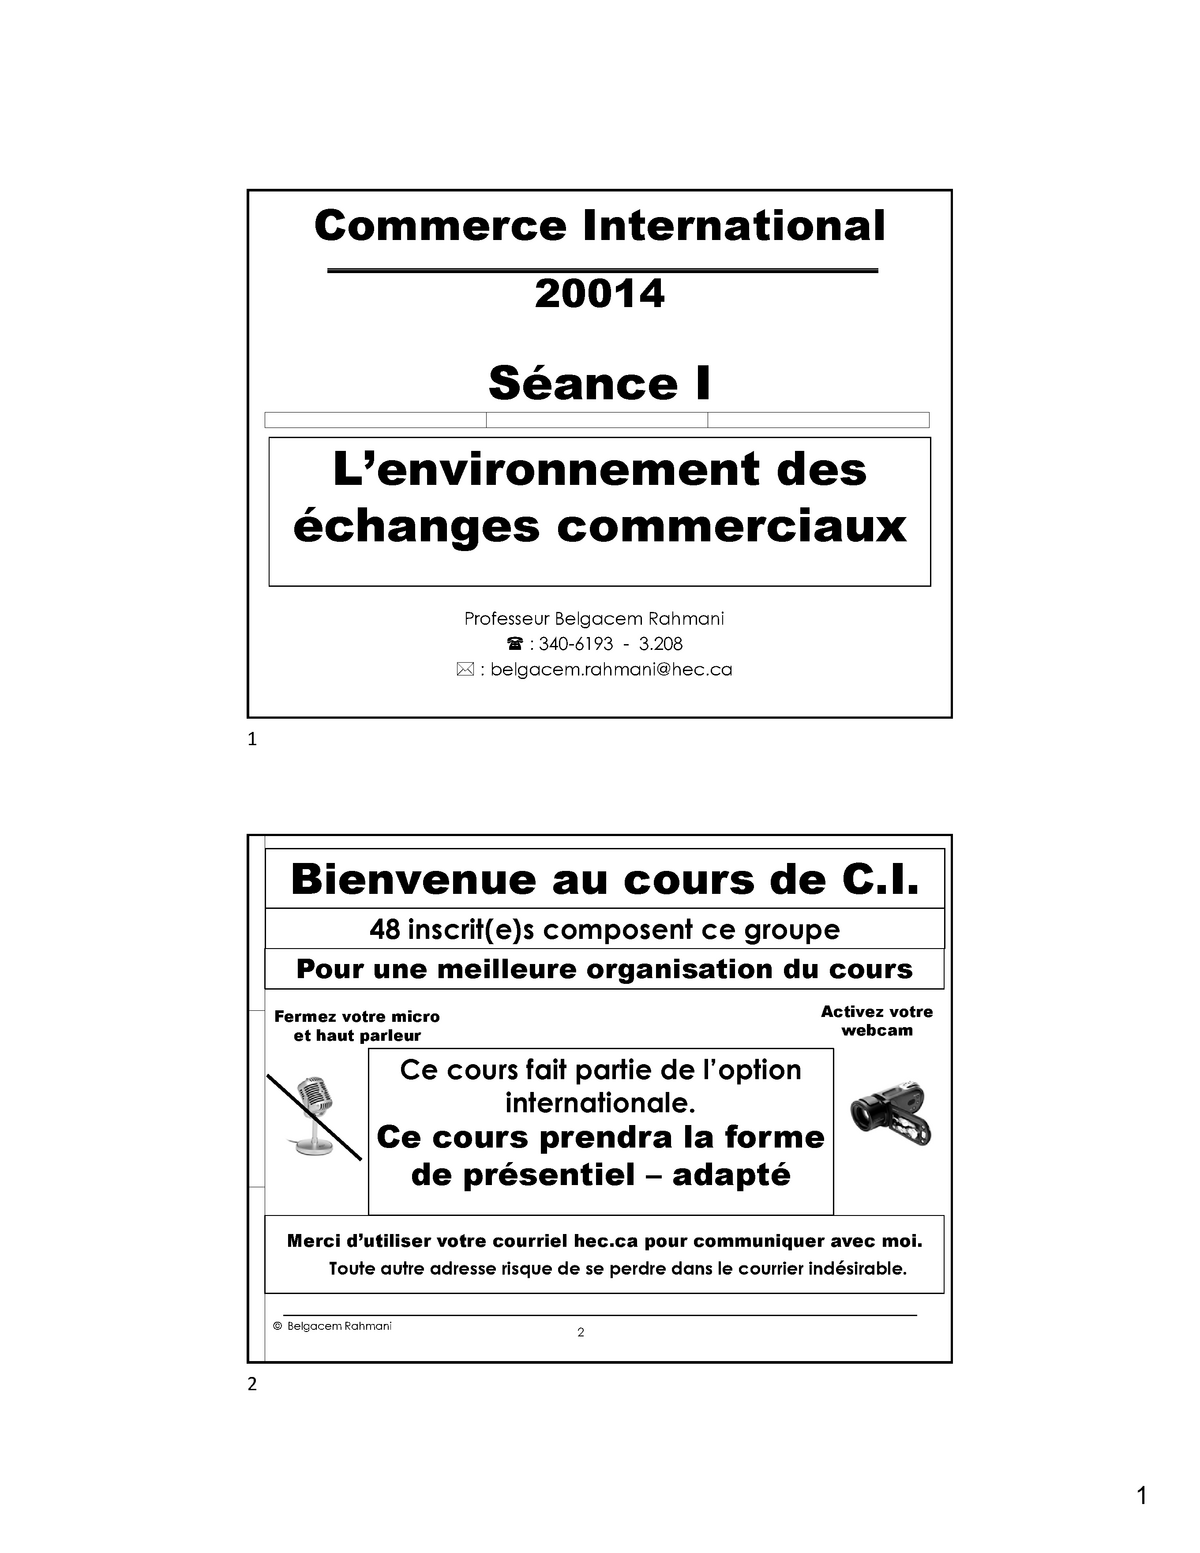 c-i-s-ance-i-2-notes-de-cours-1-commerce-international-20014